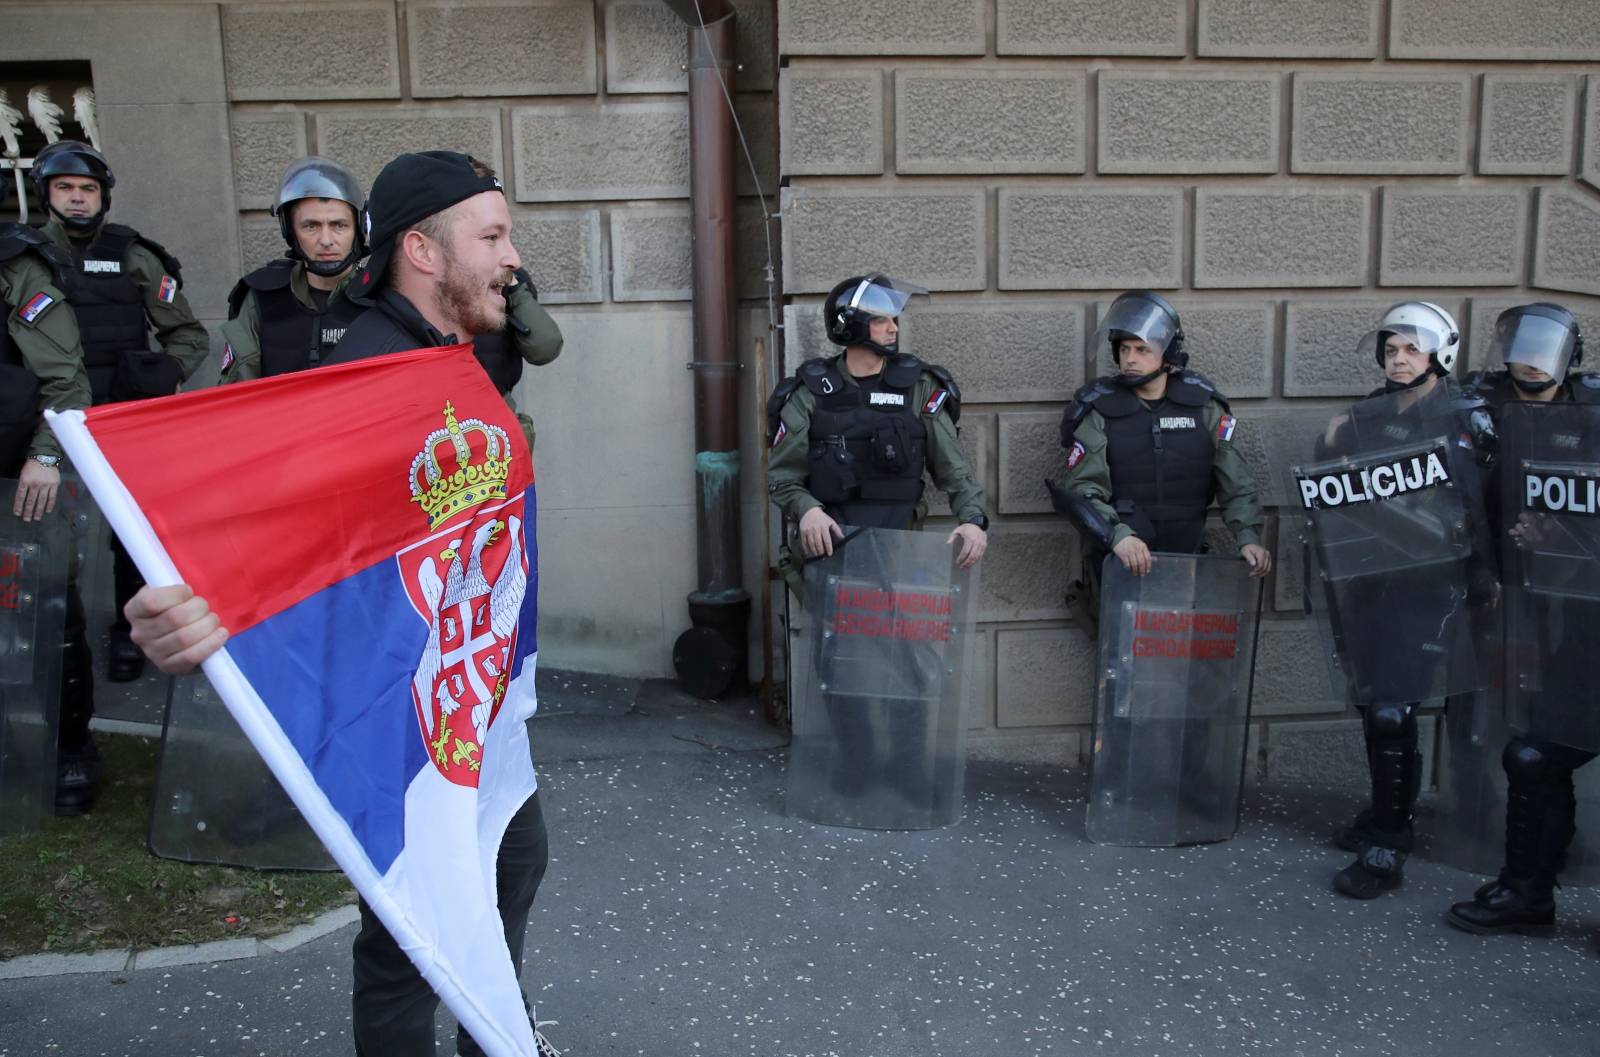 Protest against Serbian President Vucic in Belgrade